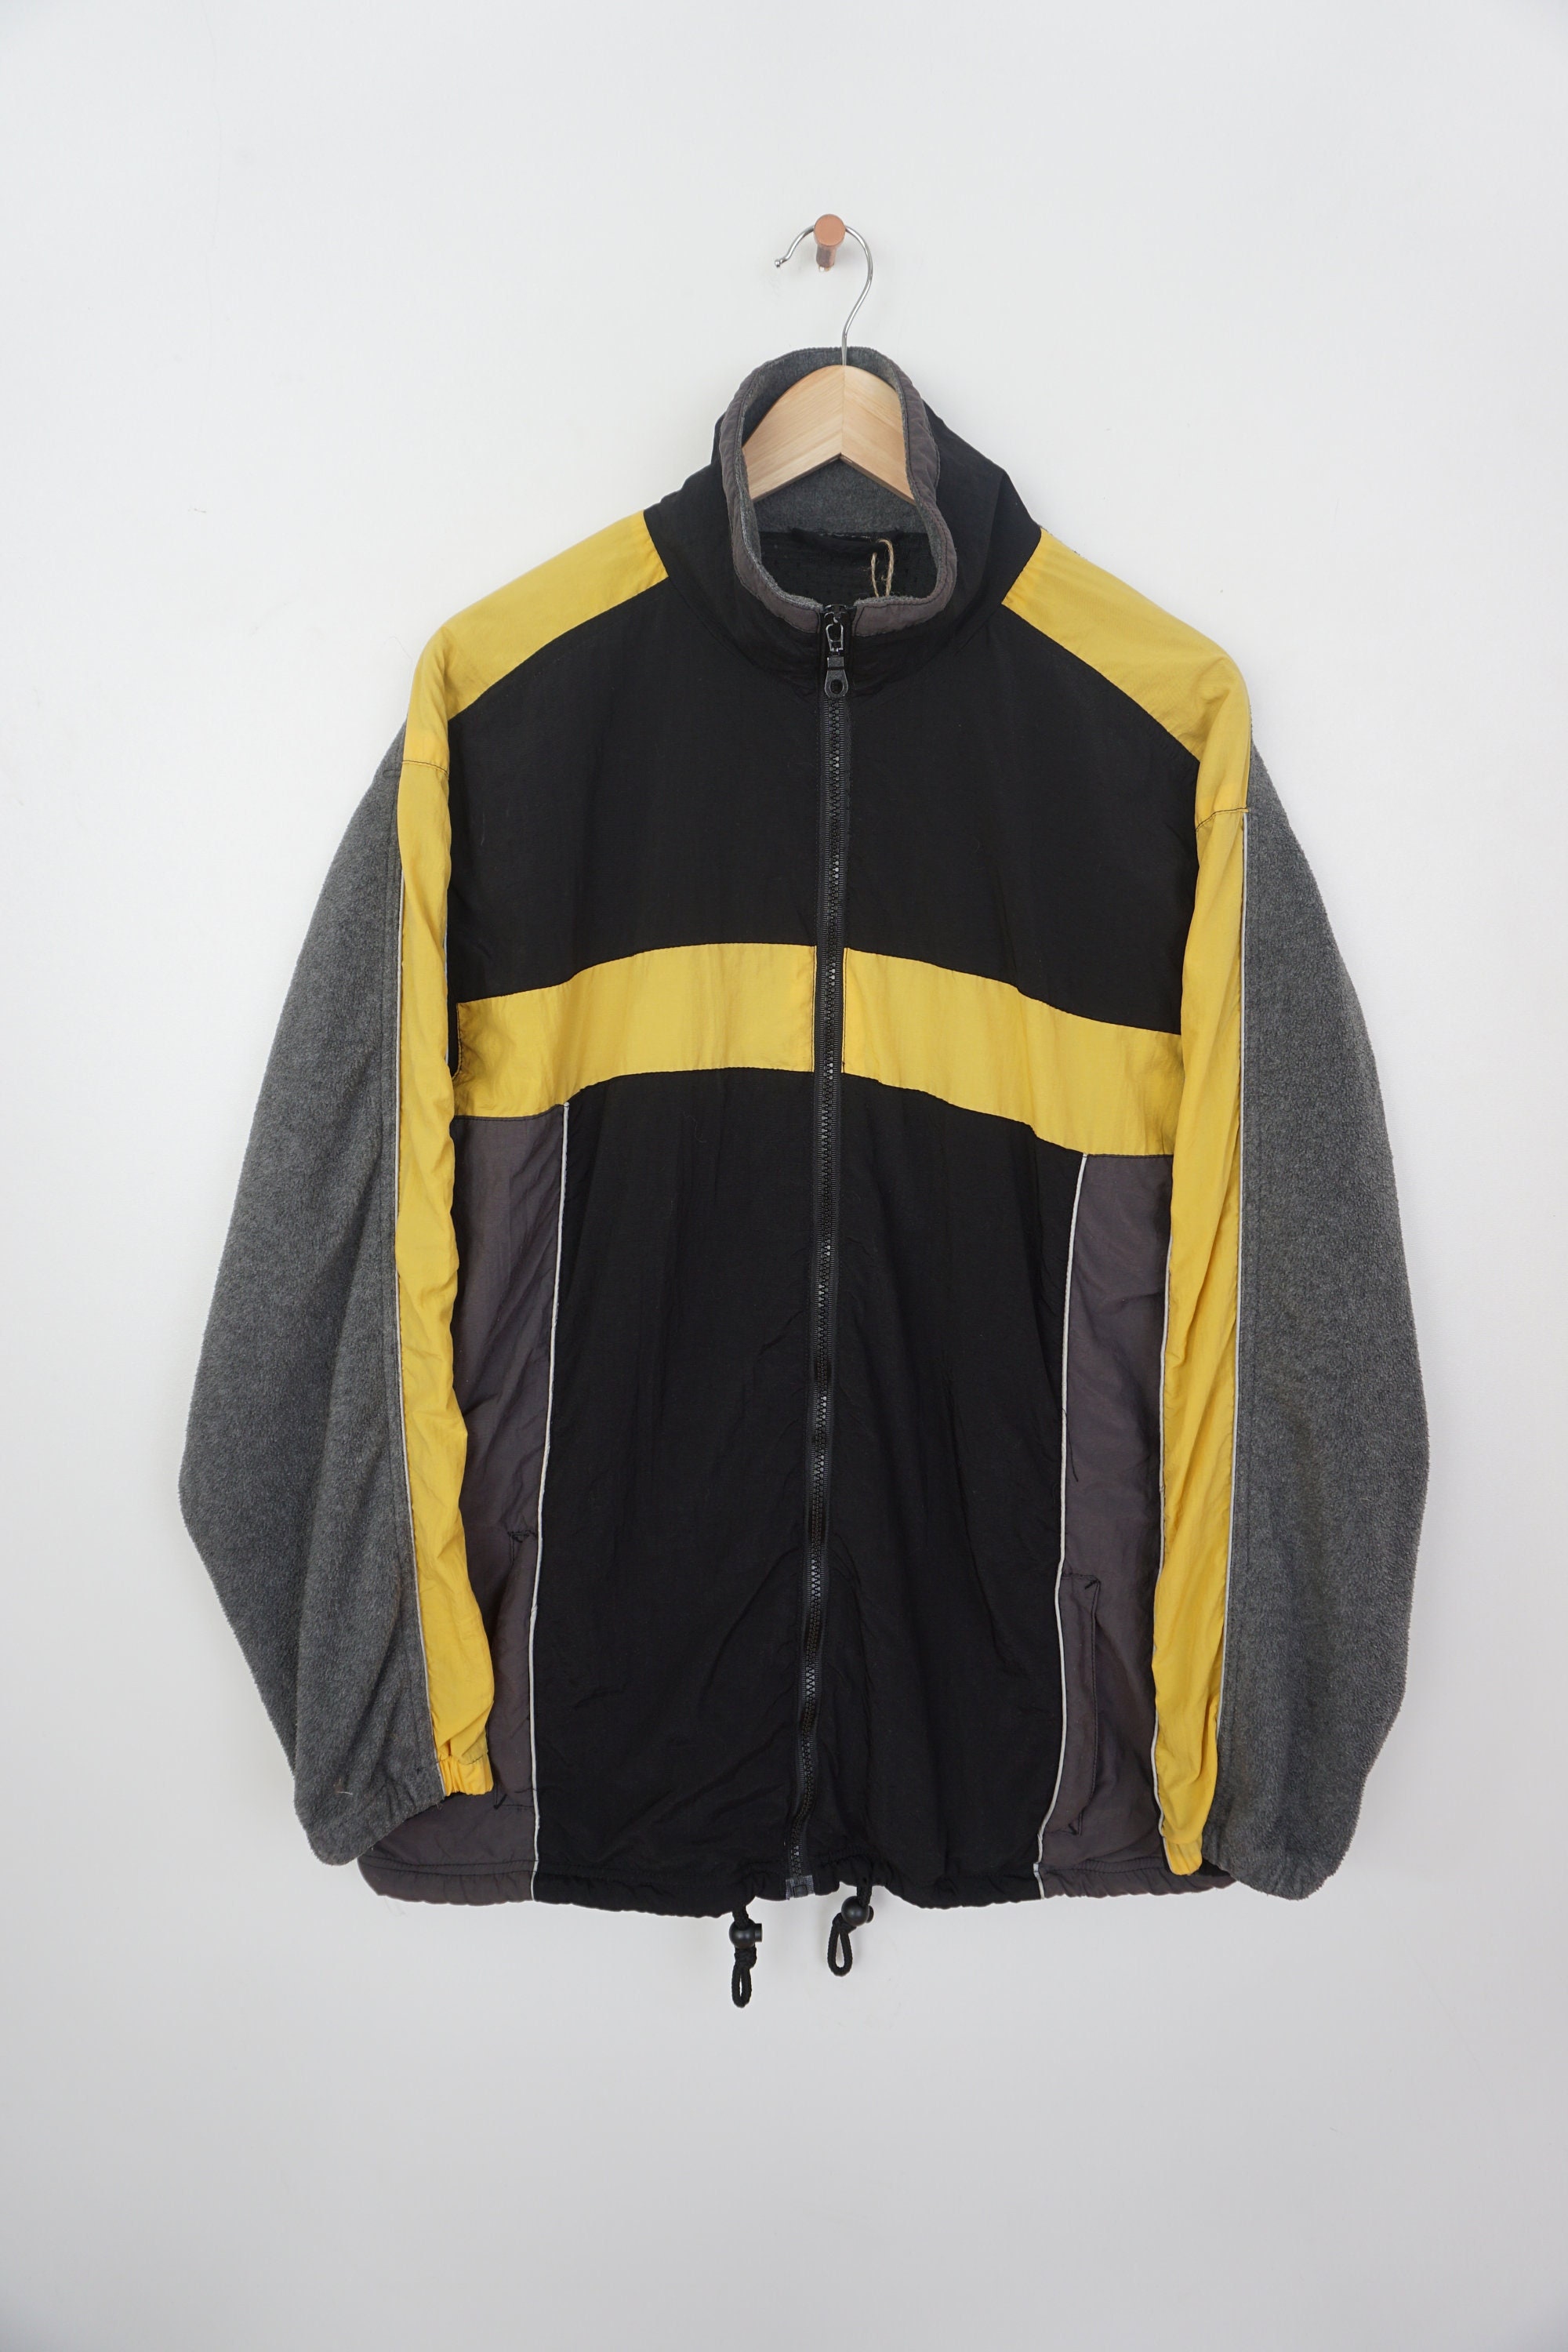 Rare Vintage Coleman Fleece Sweater Jacket / Pile Jacket Style